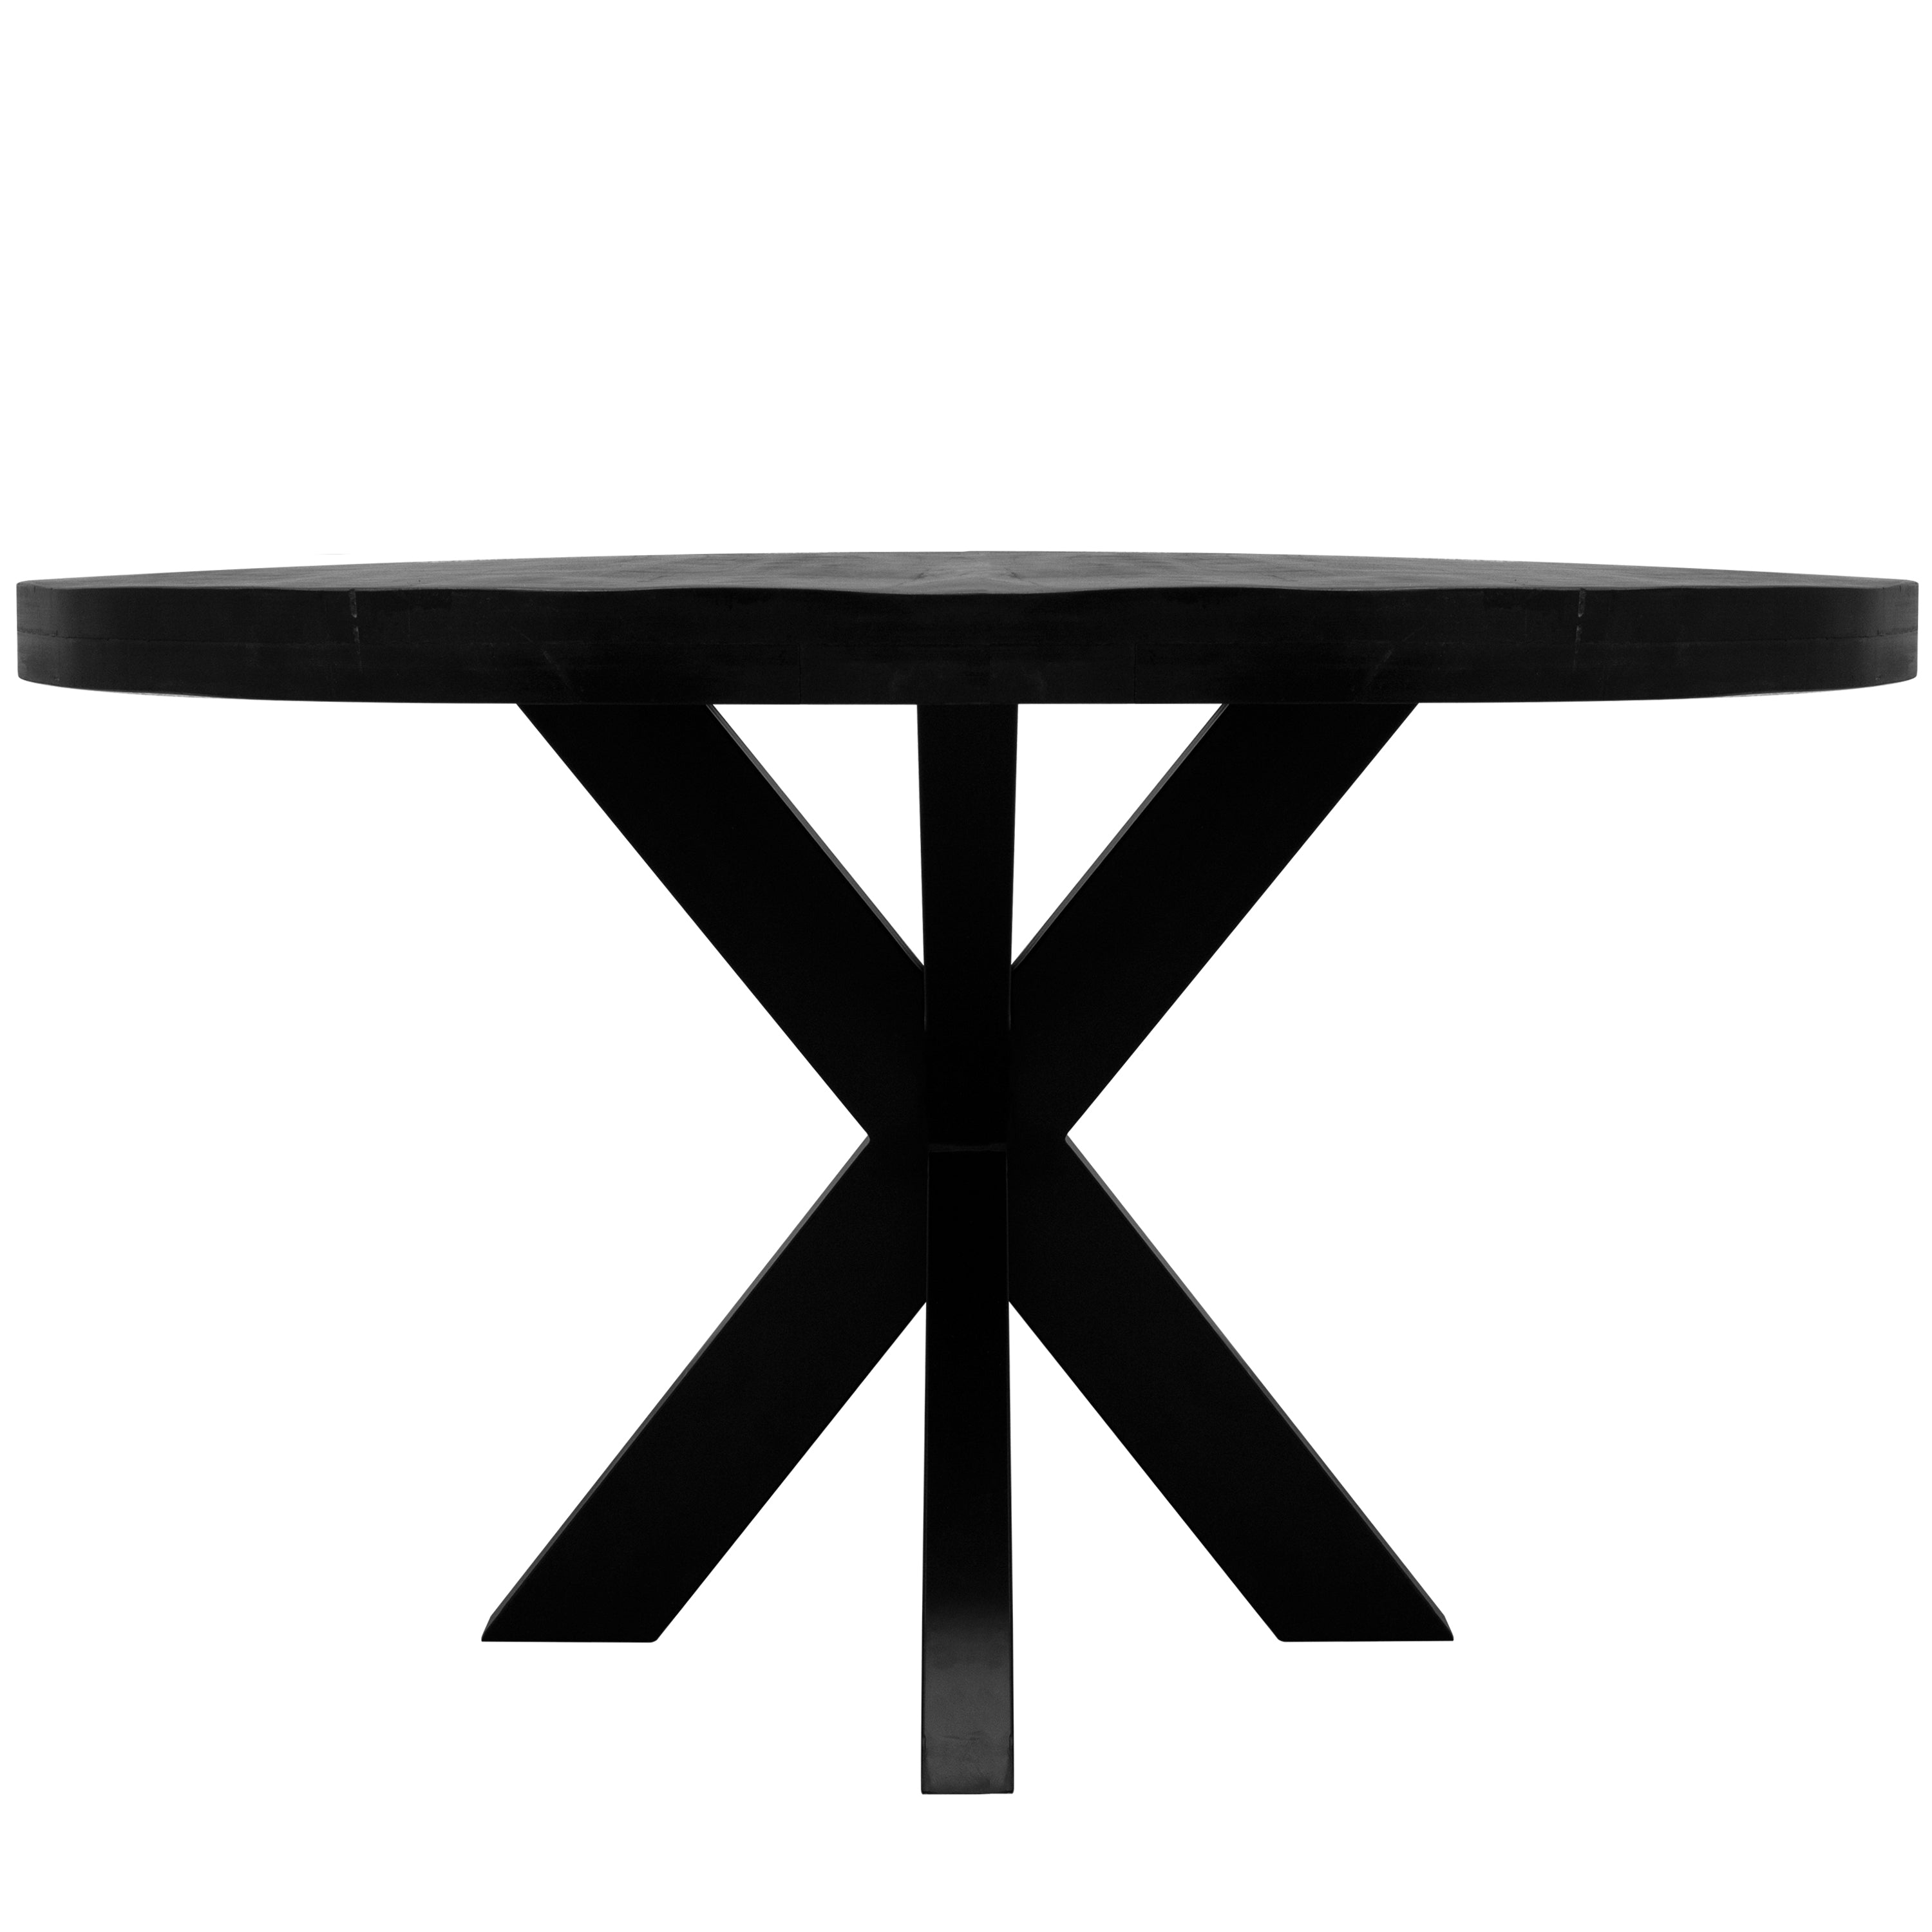 Kick dining table Dax round - 140cm